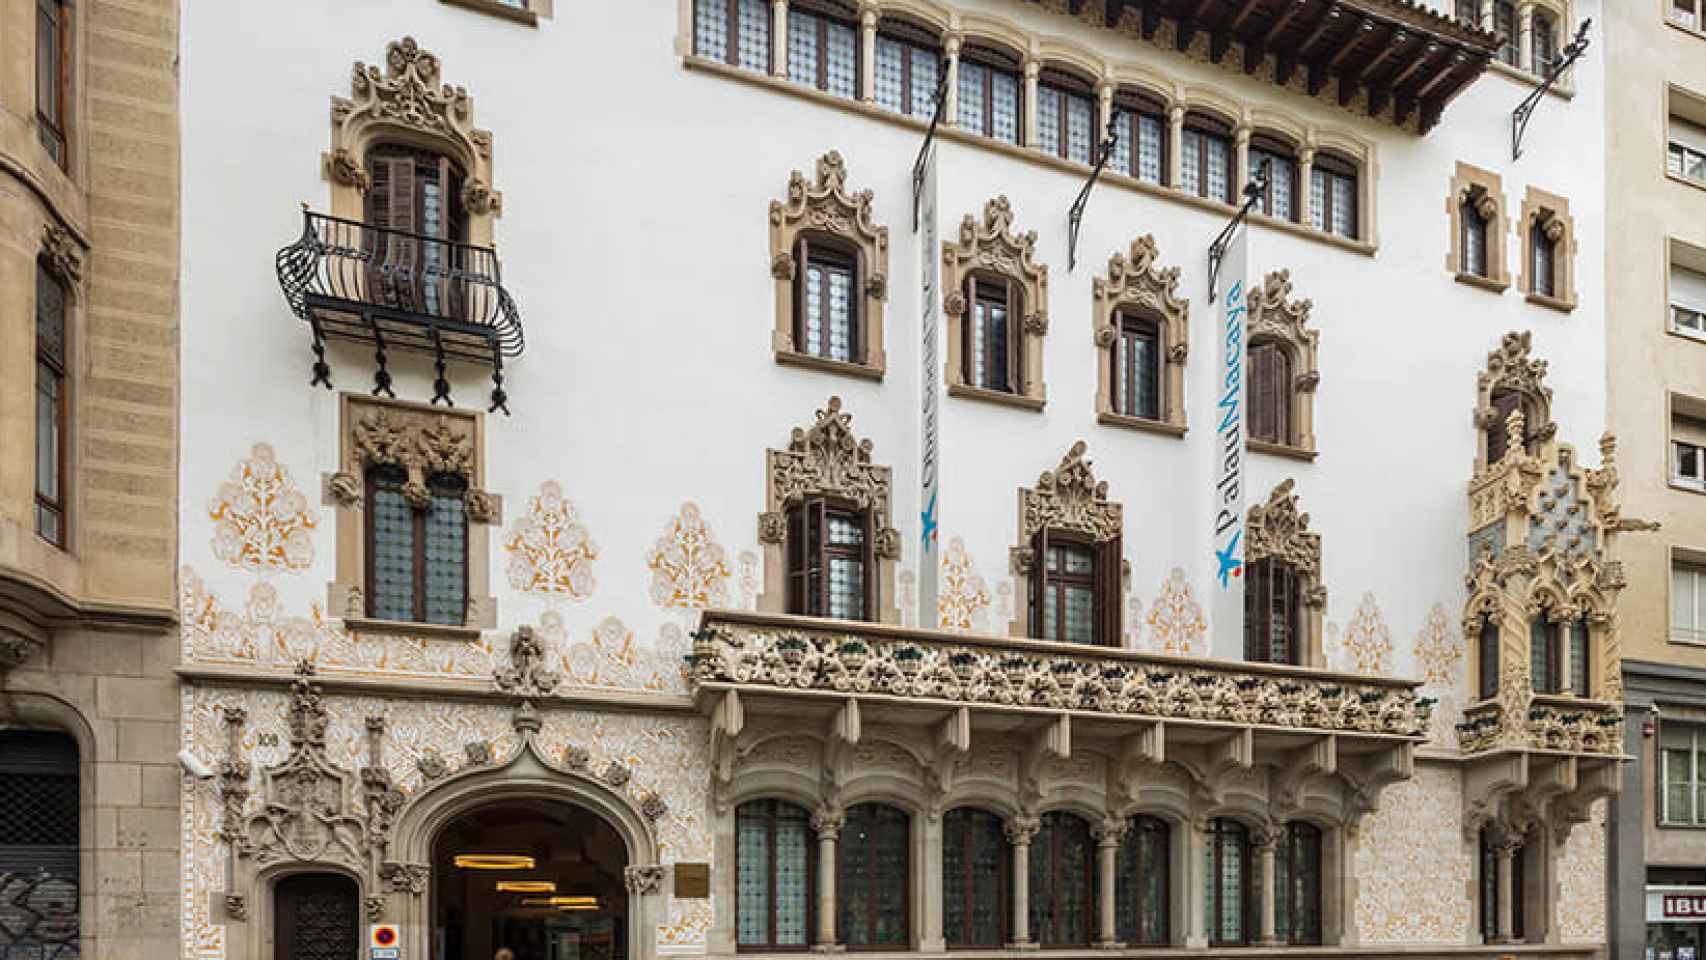 Casa Macaya, del arquitecto Puig i Cadafalch, en el paseo de Sant Joan de Barcelona